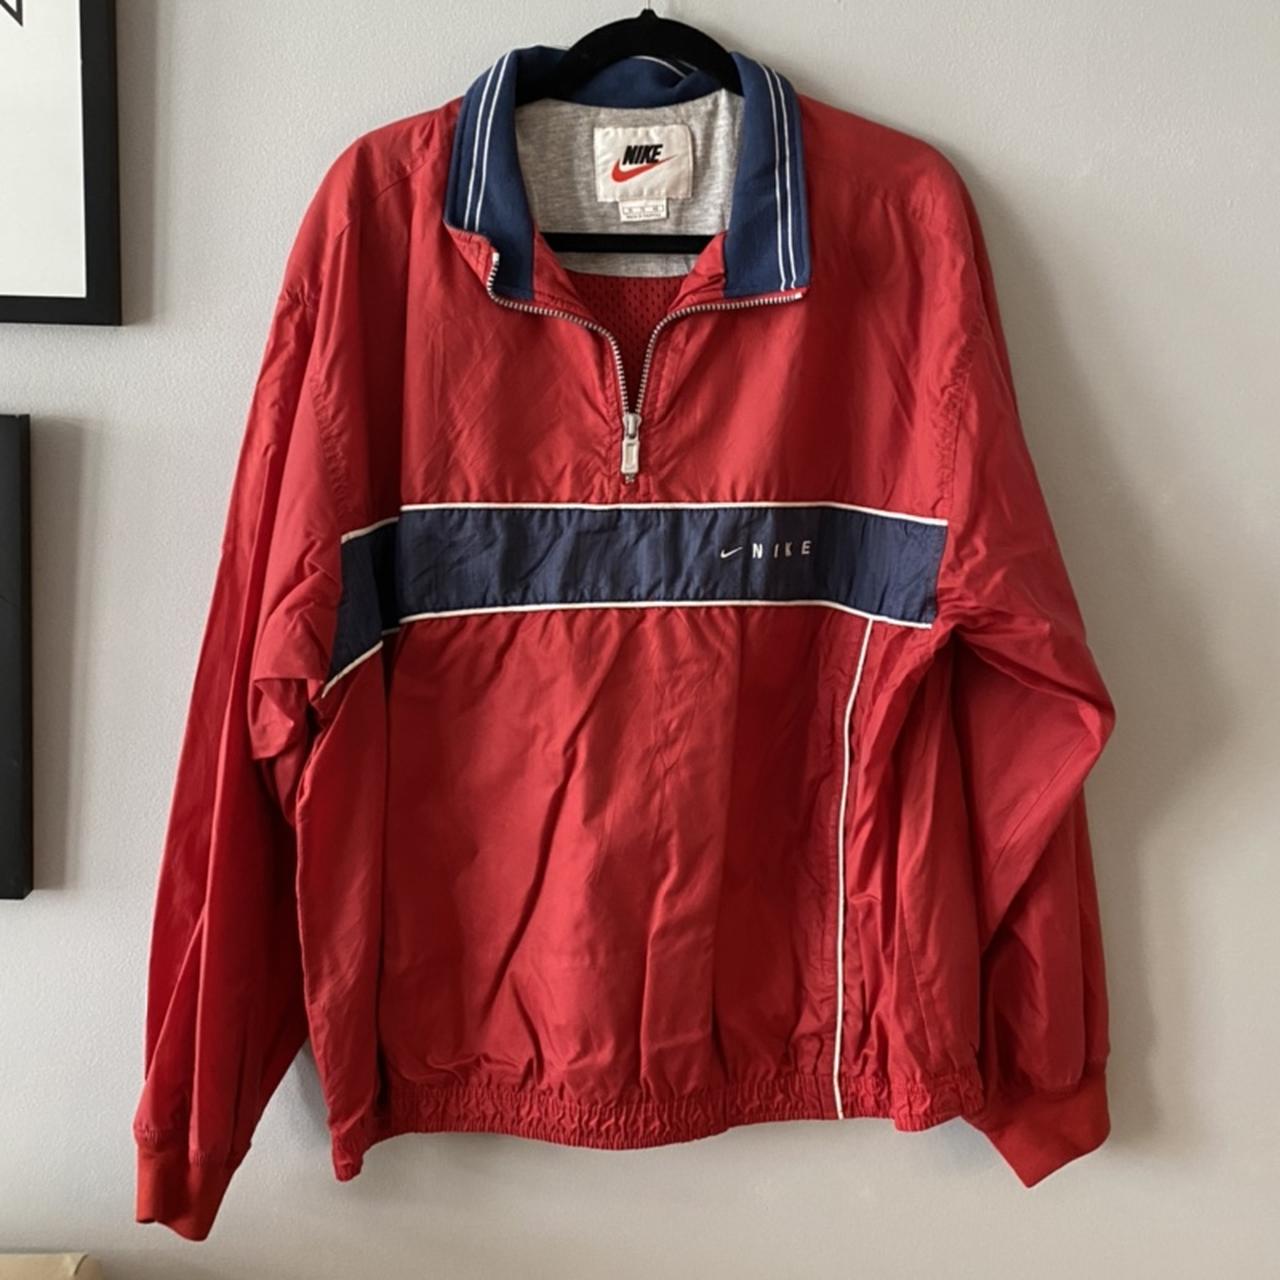 Red, White, and Blue Nike Vintage Jacket‼️ Size:... - Depop